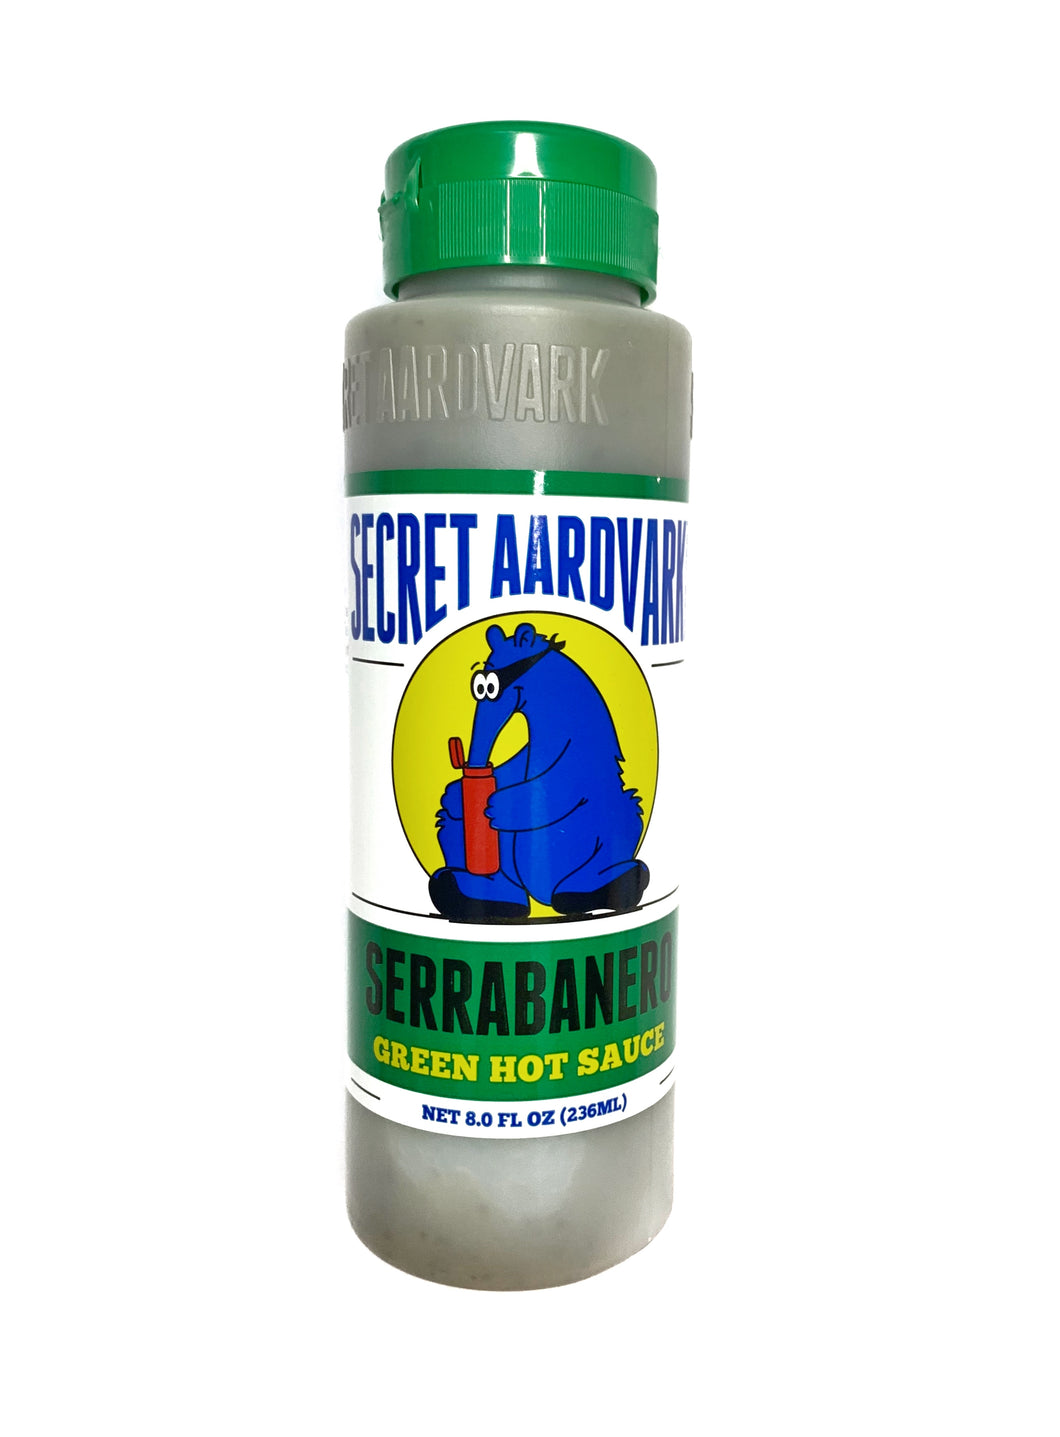 Secret Aardvark Serrabanero Green Sauce